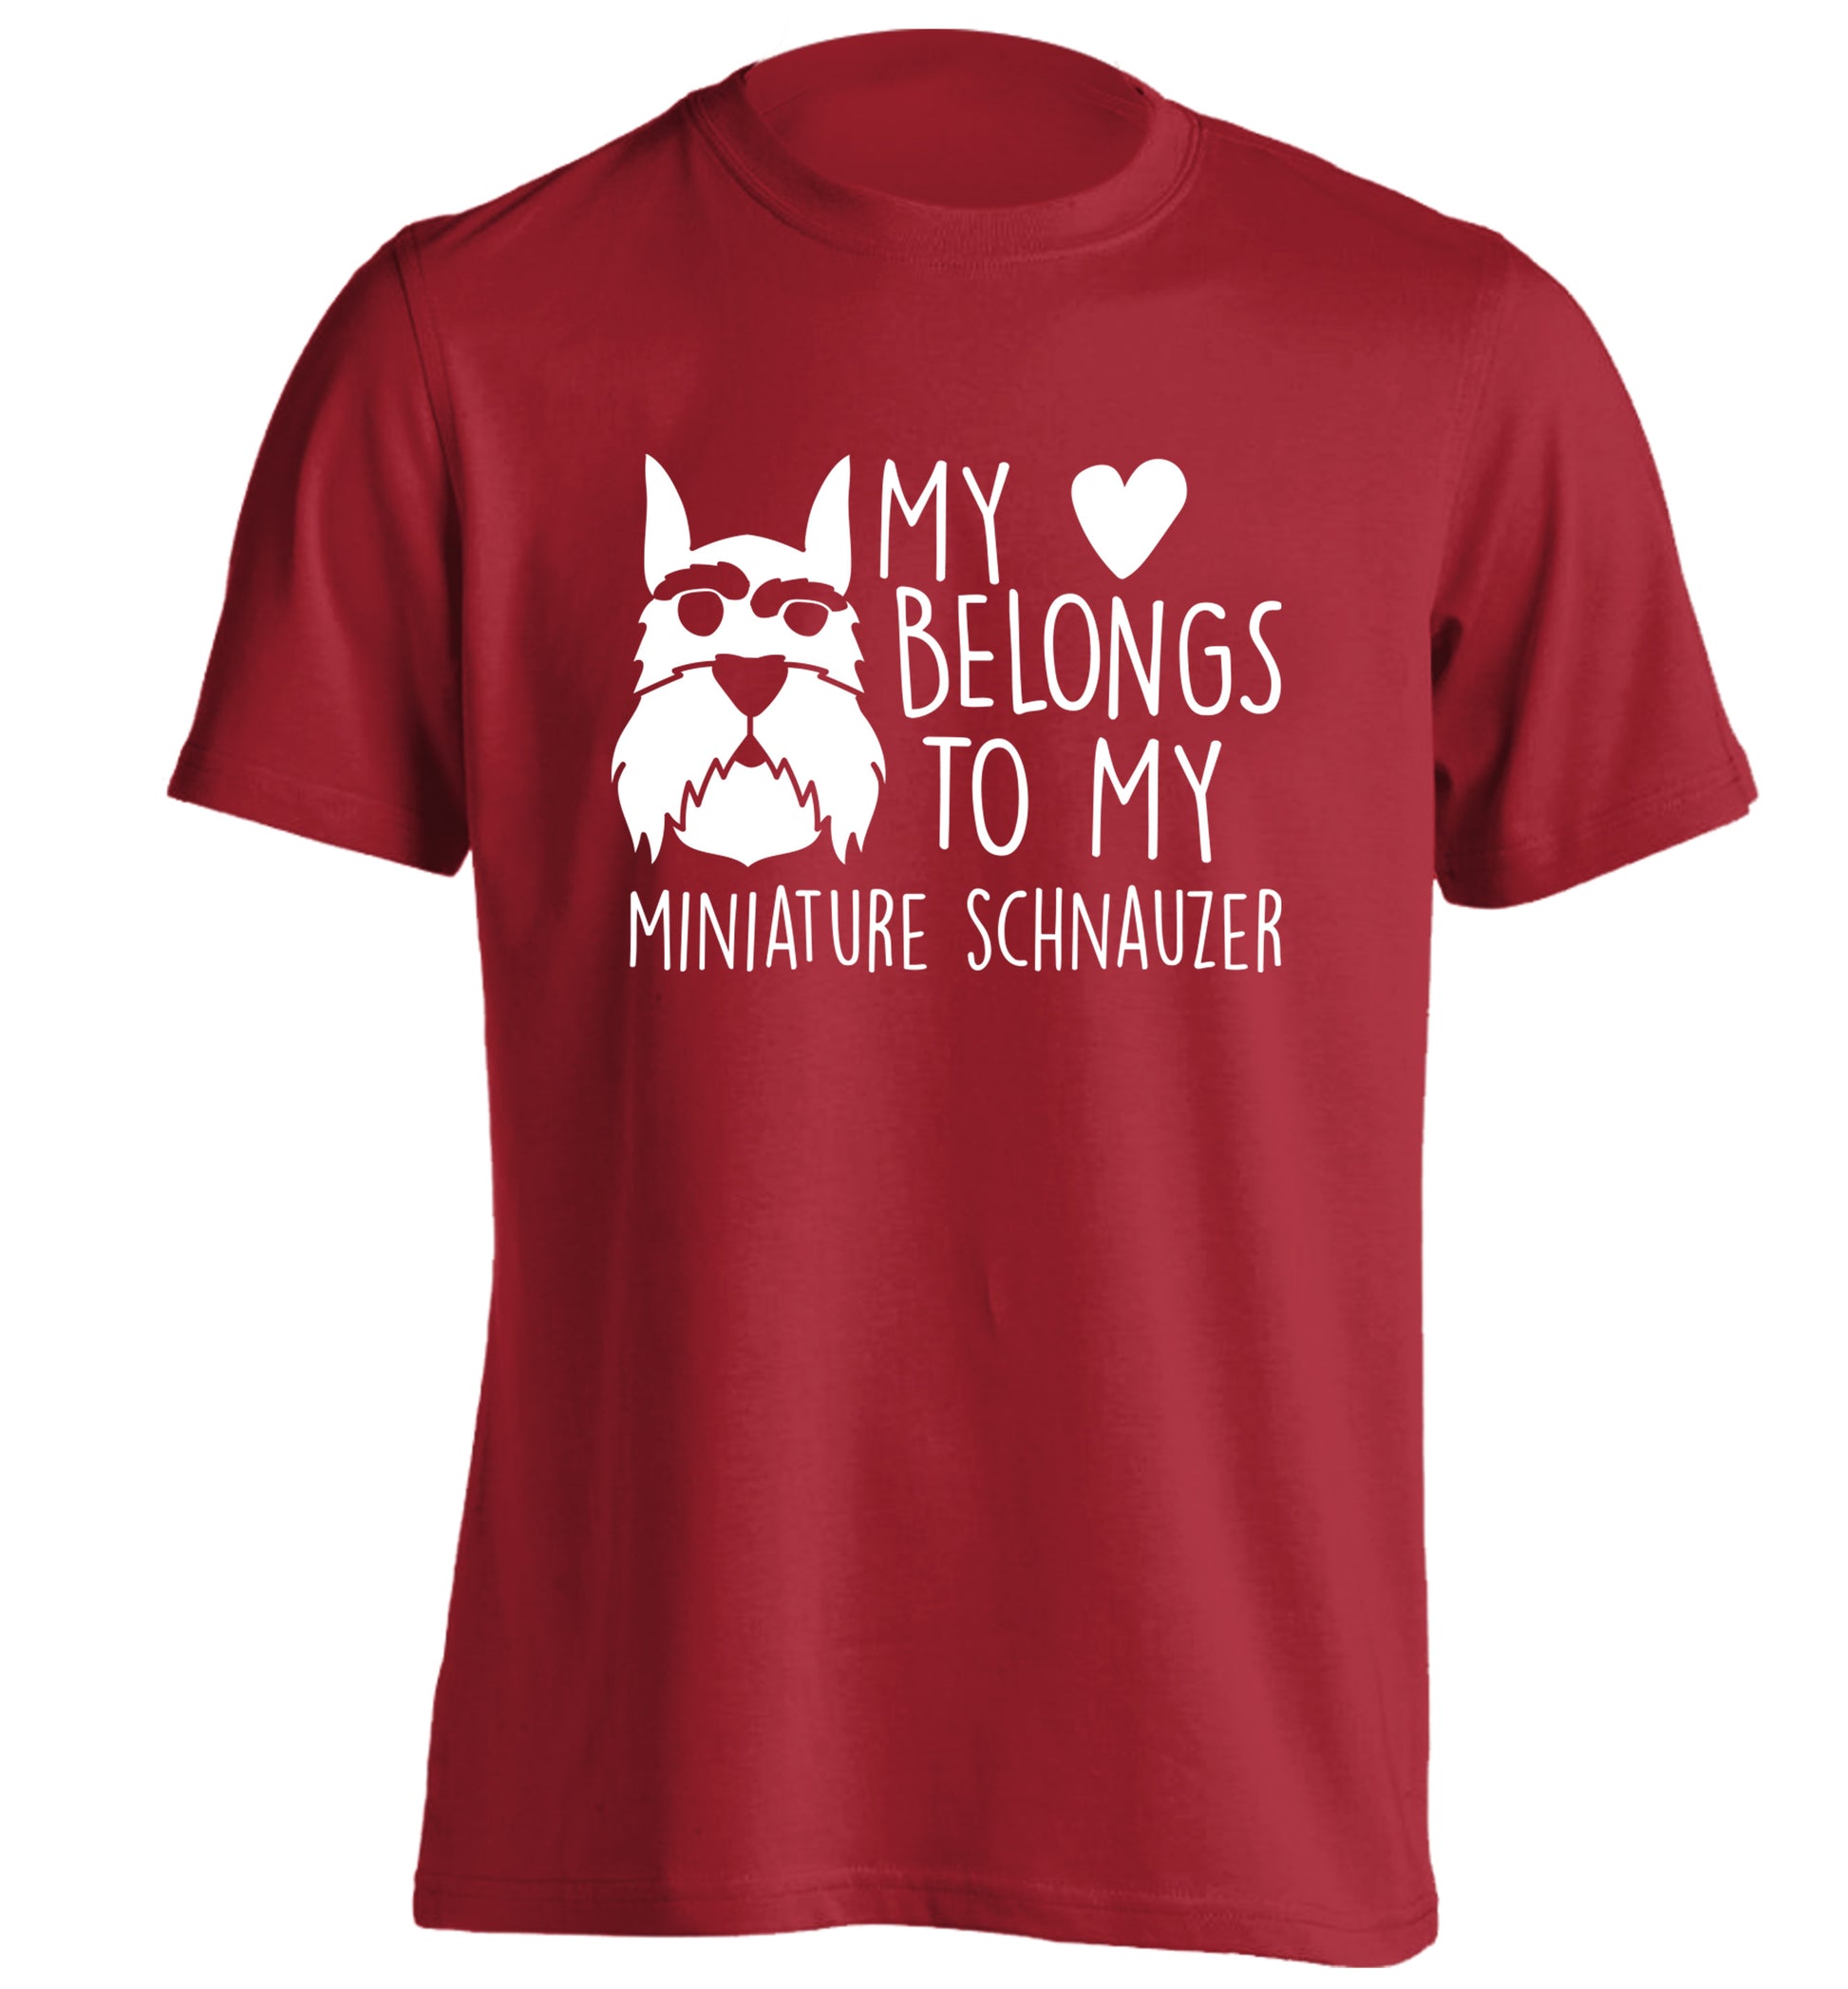 My heart belongs to my miniature schnauzer adults unisex red Tshirt 2XL